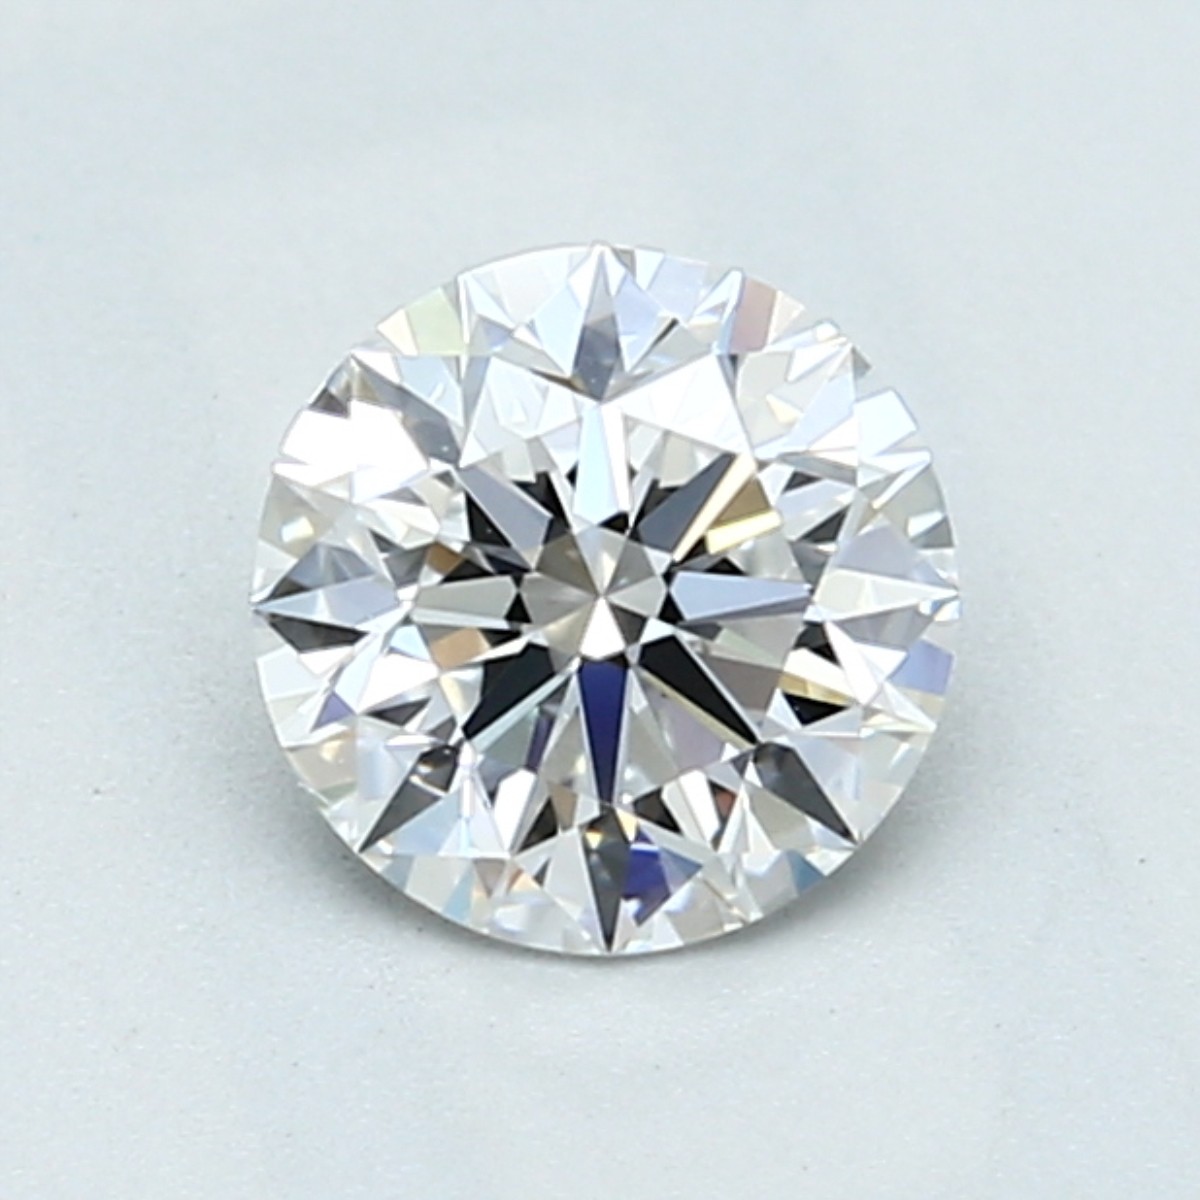 1 Carat D VS1 Diamond with None Fluorescence